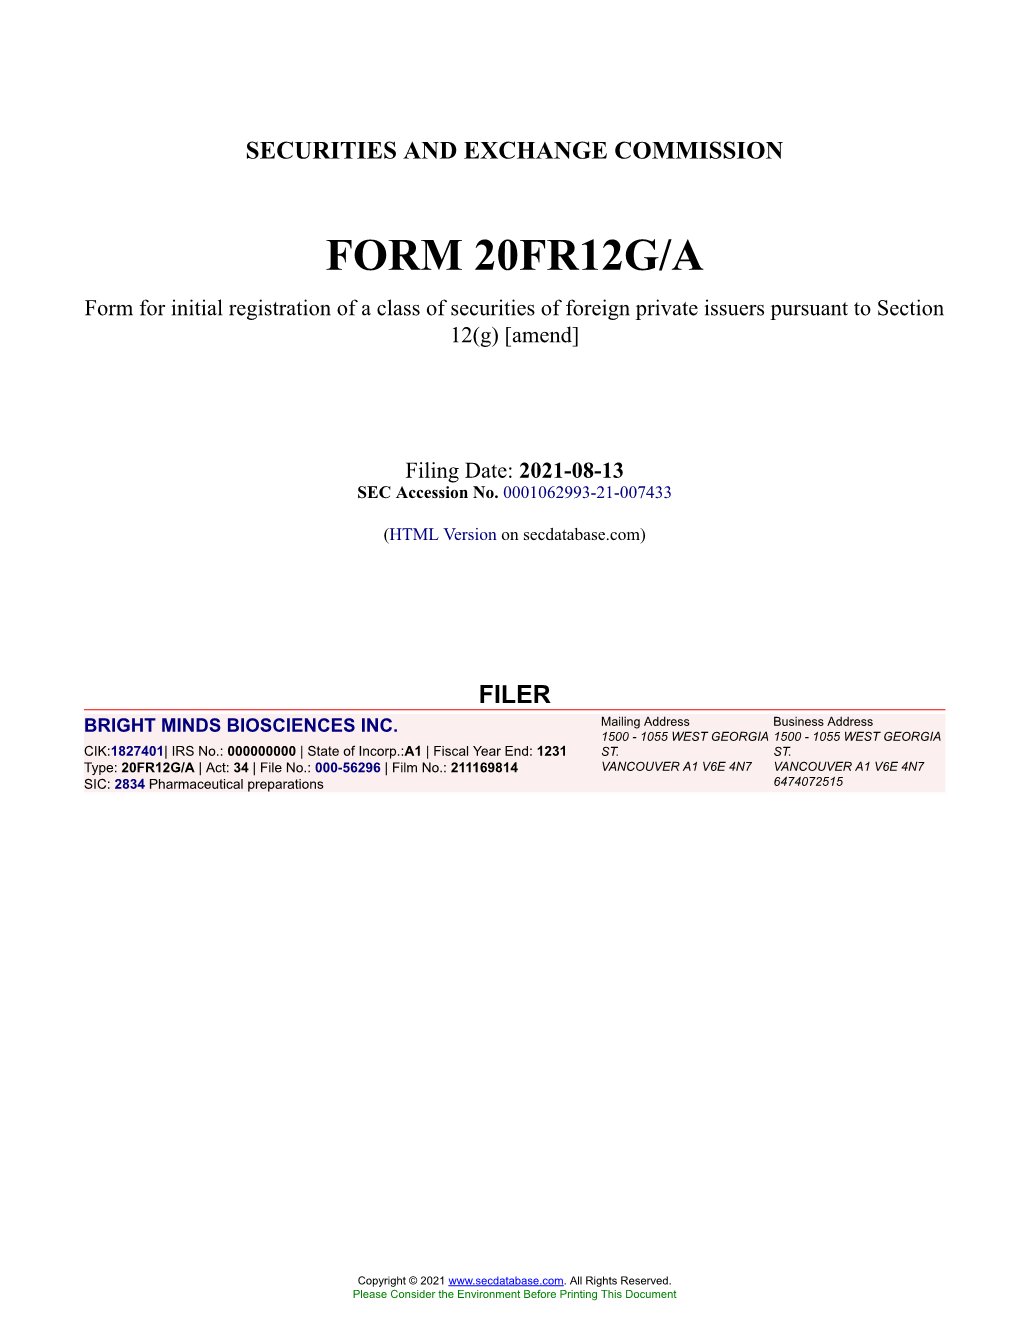 BRIGHT MINDS BIOSCIENCES INC. Form 20FR12G/A Filed 2021-08-13